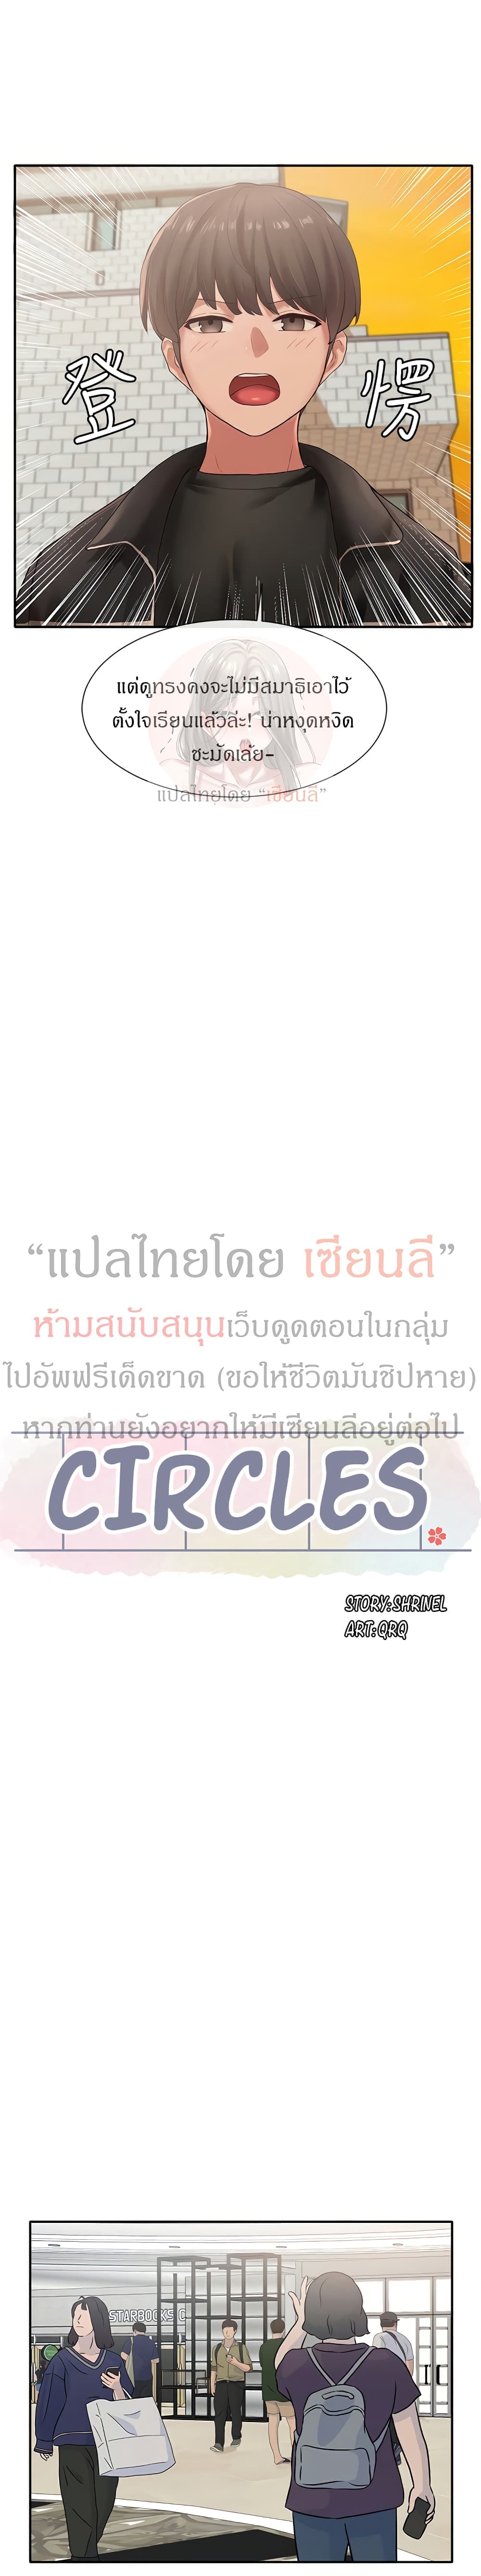 Theater Society (Circles) 38-38